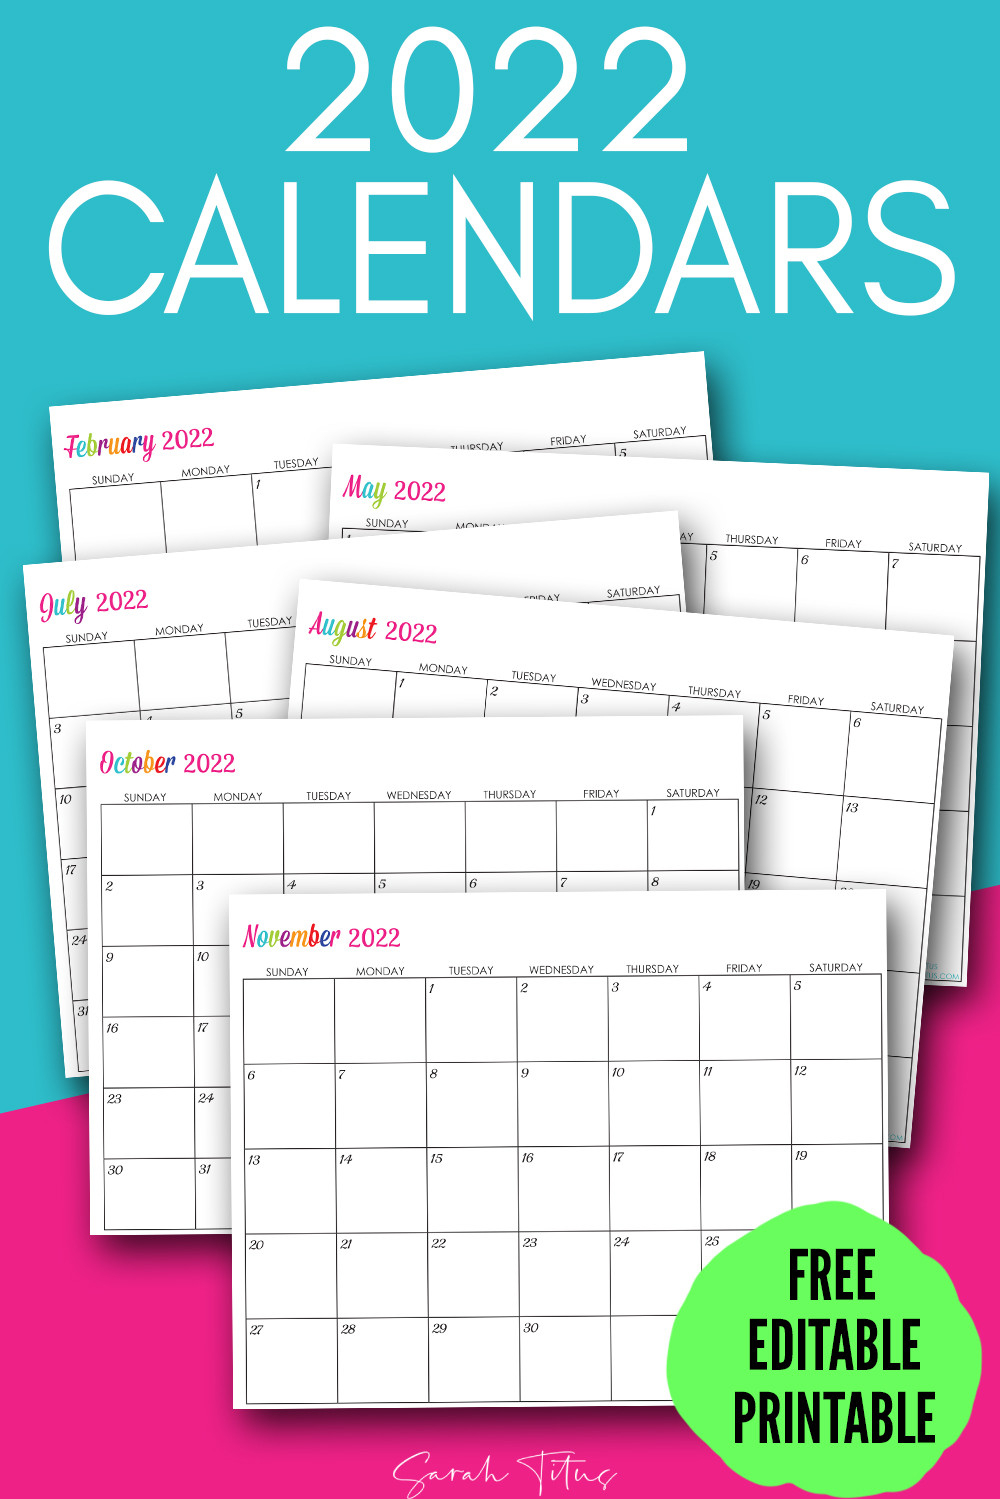 Printables Calendars Archives - Sarah Titus | From  2022 Calendar Printable Pink